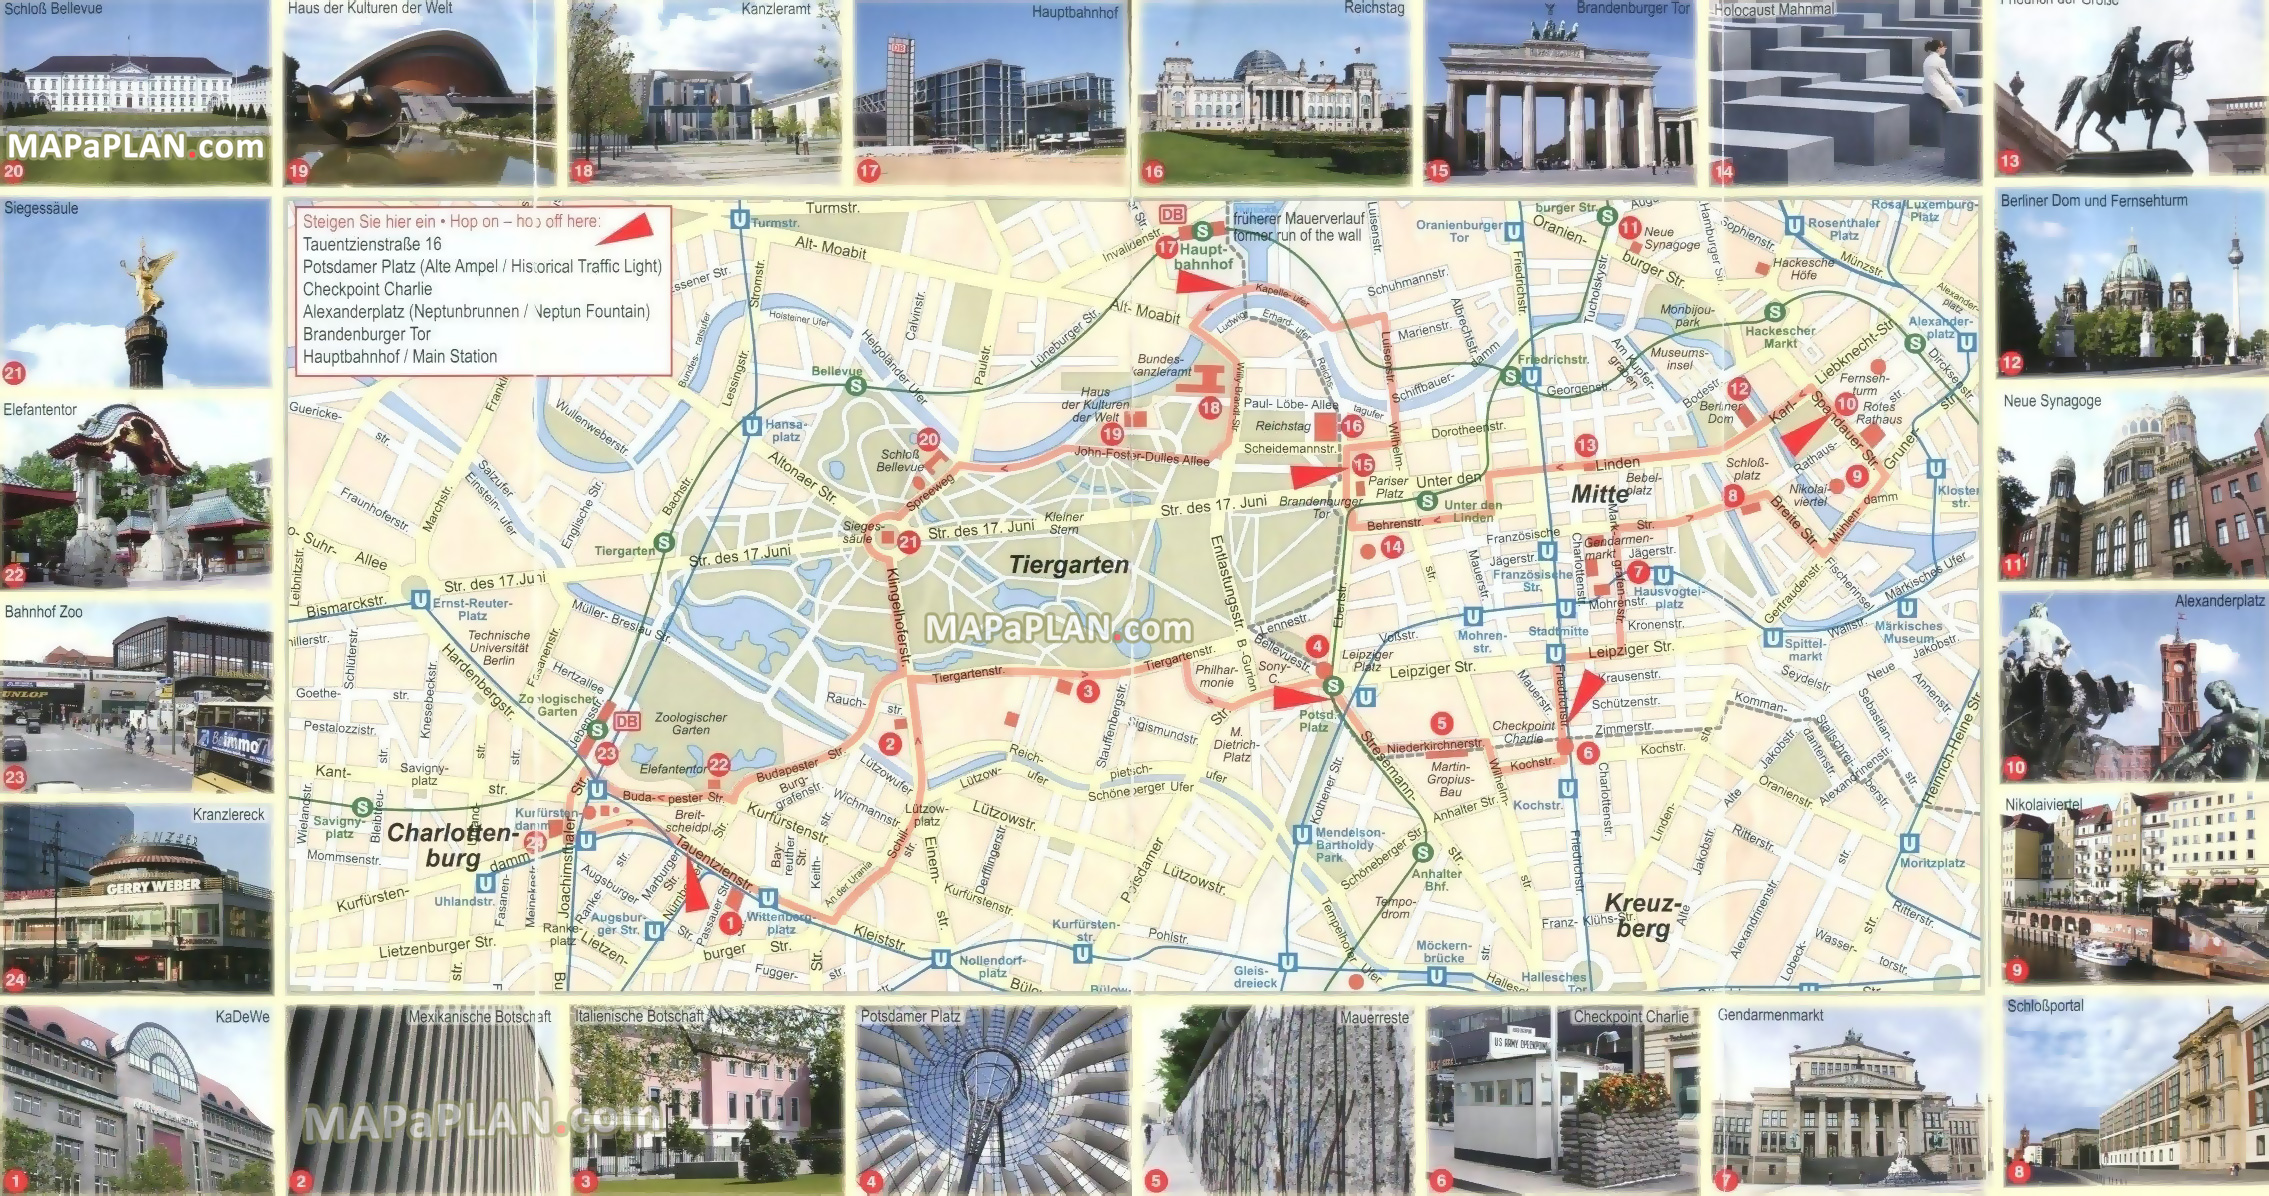 free virtual map 24 images famous travel hotspots historical buildings brandenburg gate Berlin top tourist attractions map